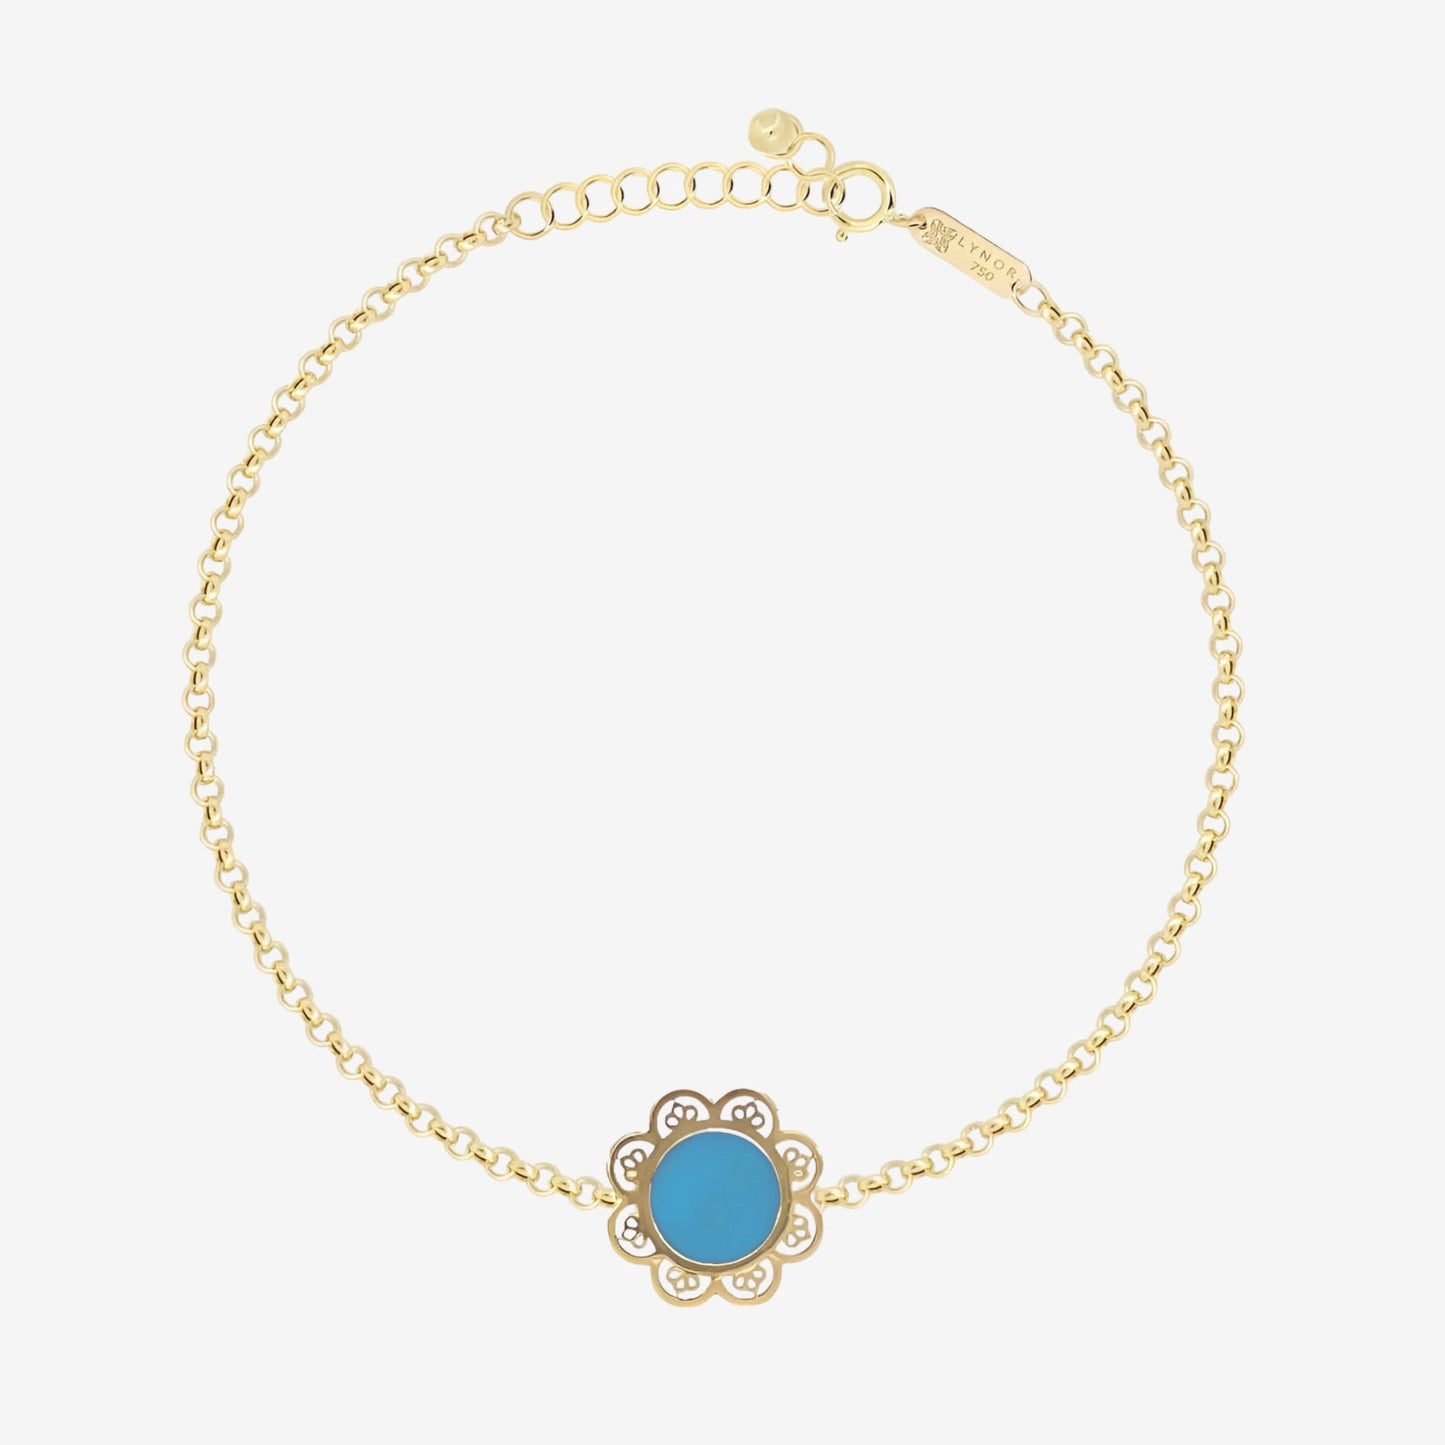 Floral Bracelet in Turquoise - 18k Gold - Lynor